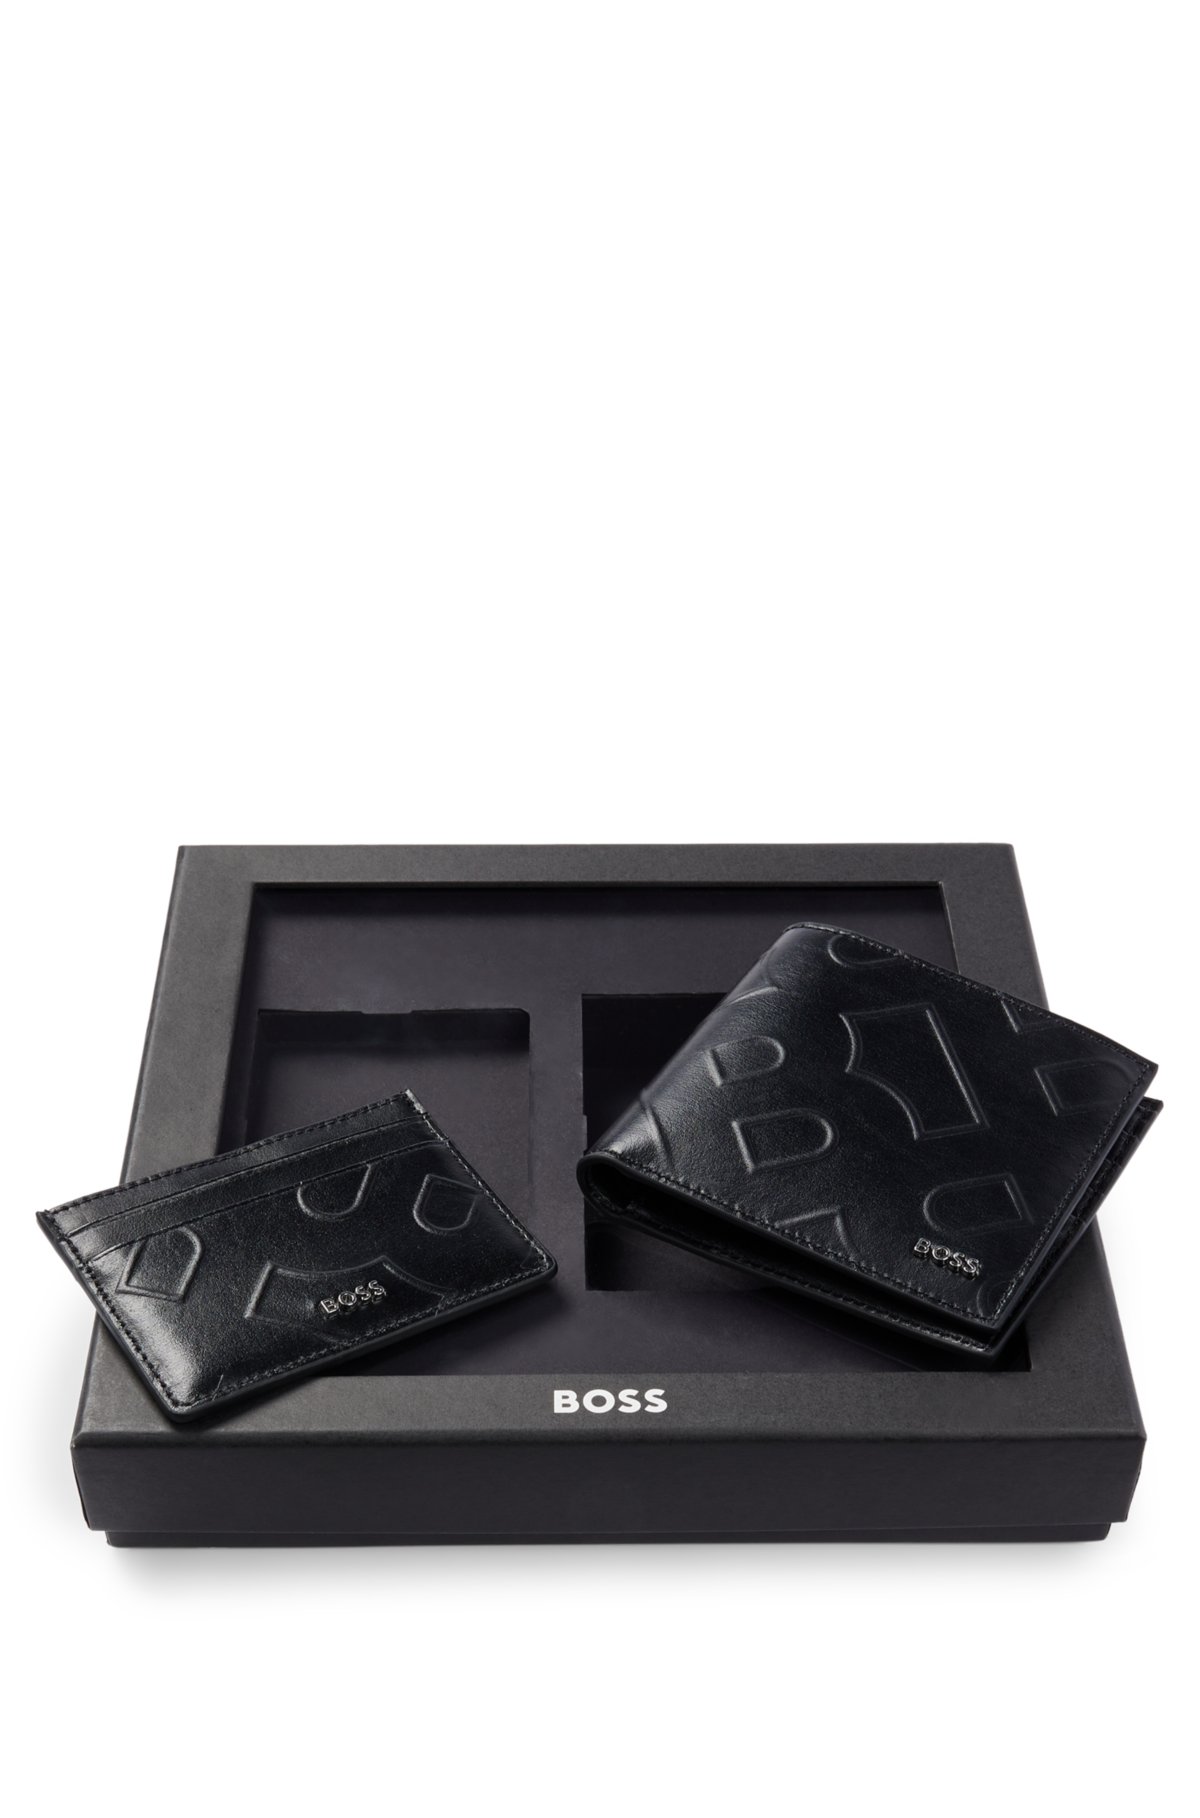 Monogram-embossed leather card case and wallet gift set, Black